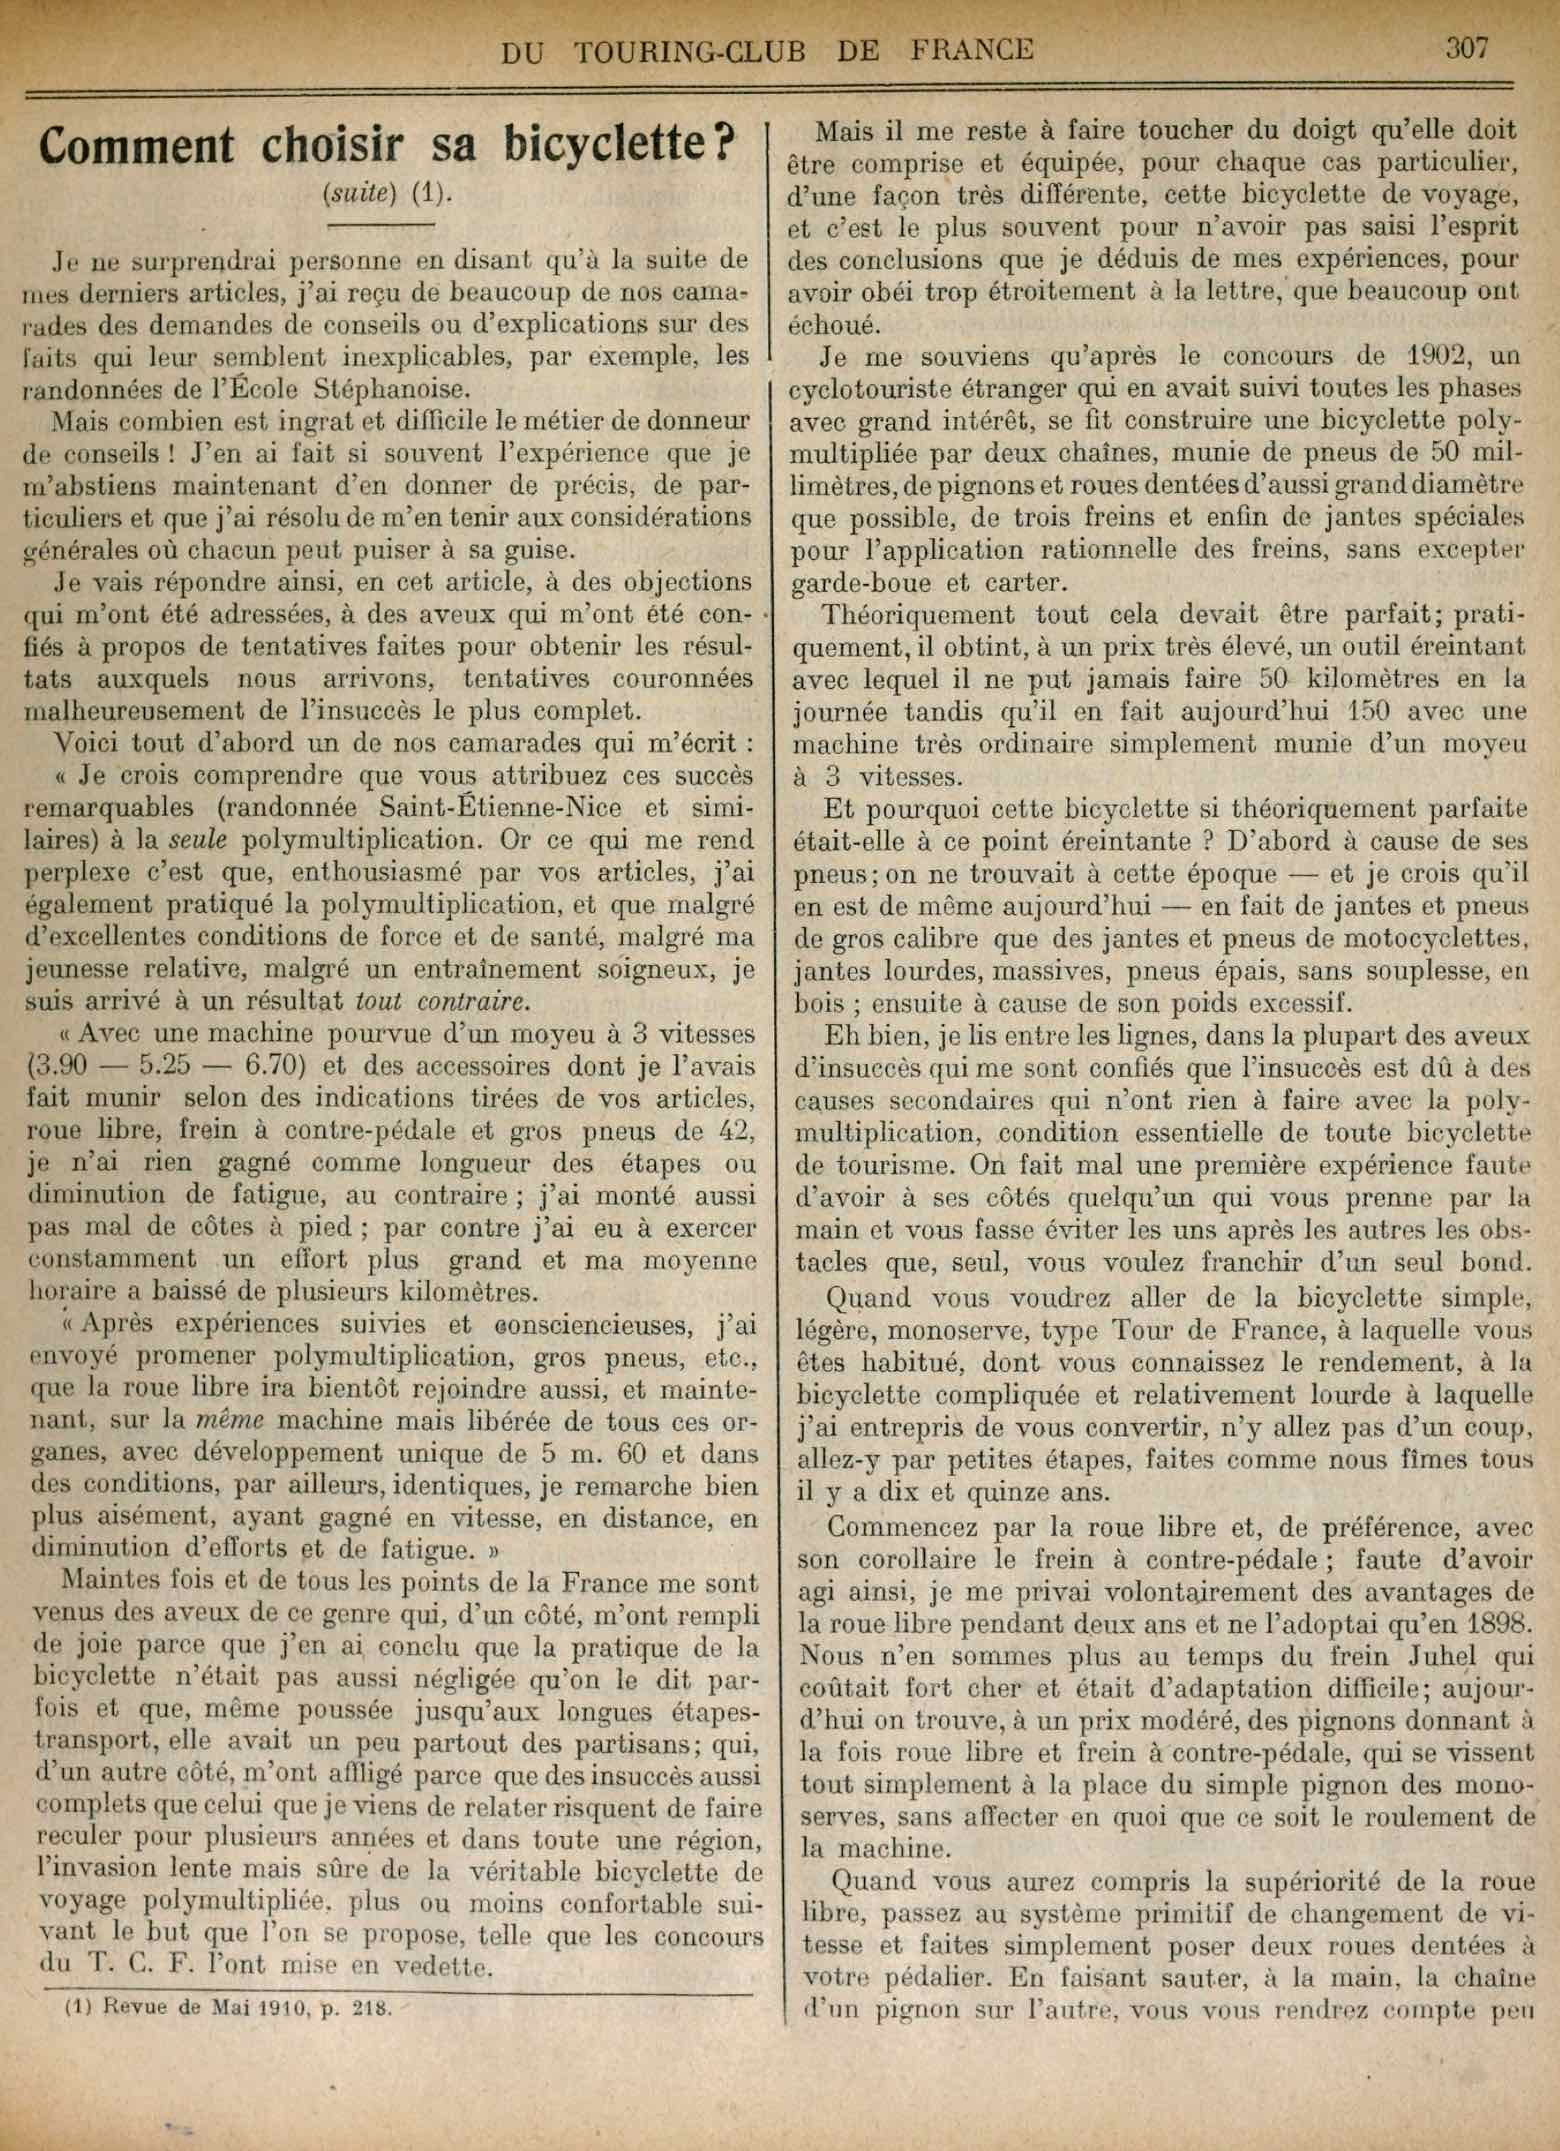 T.C.F. Revue Mensuelle July 1910 - Comment choisir sa bicyclette? (part V) scan 1 main image